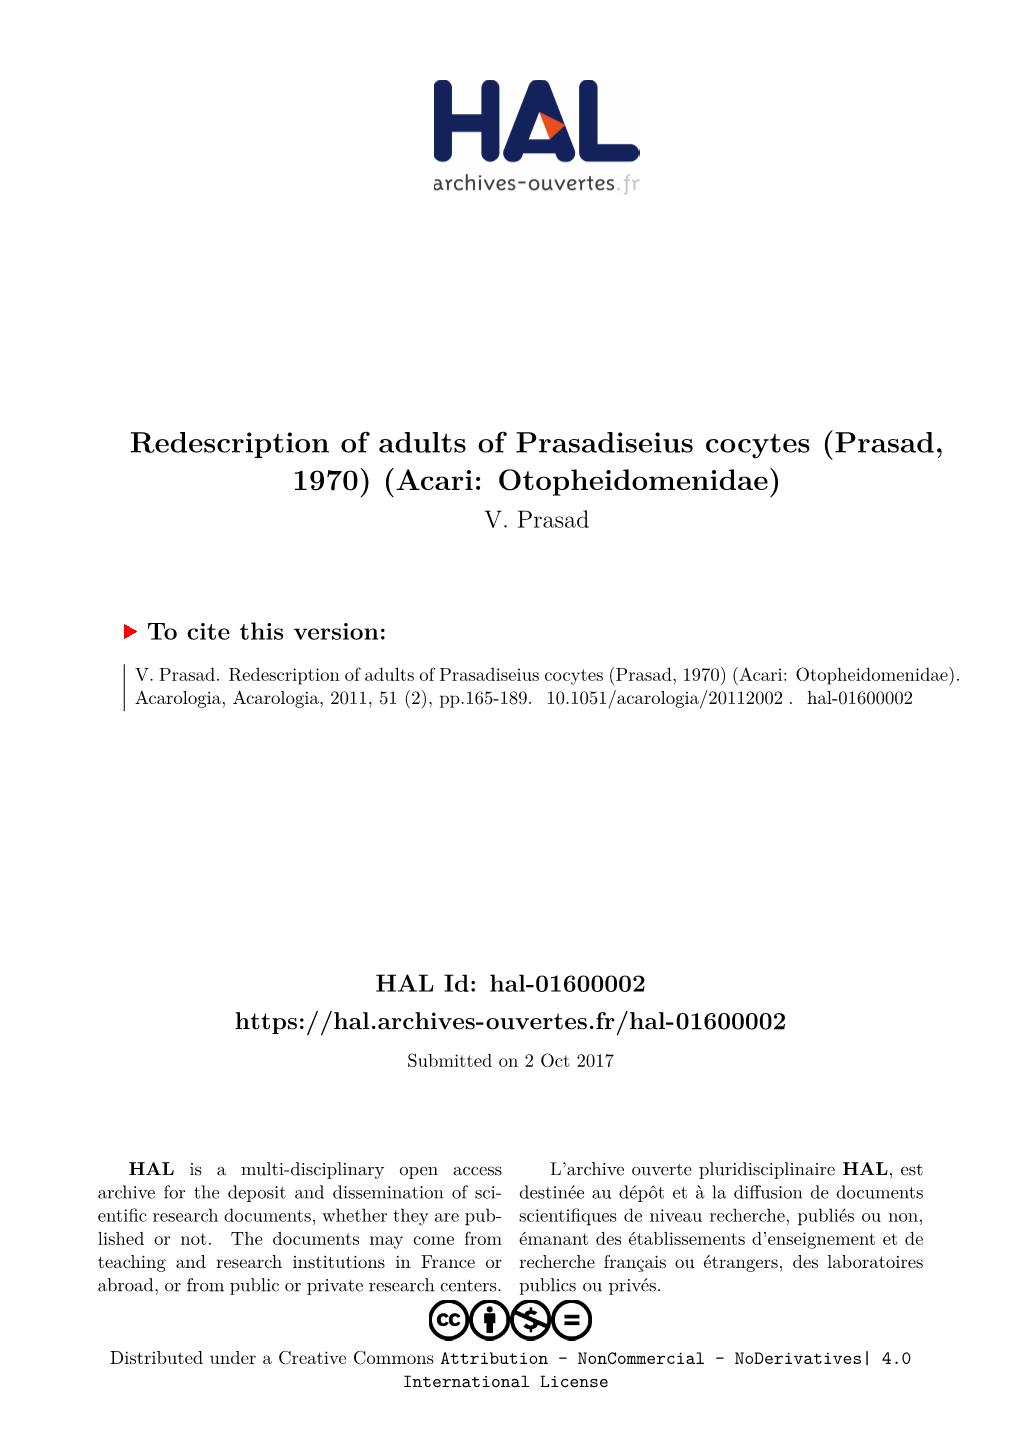 Redescription of Adults of Prasadiseius Cocytes (Prasad, 1970) (Acari: Otopheidomenidae) V